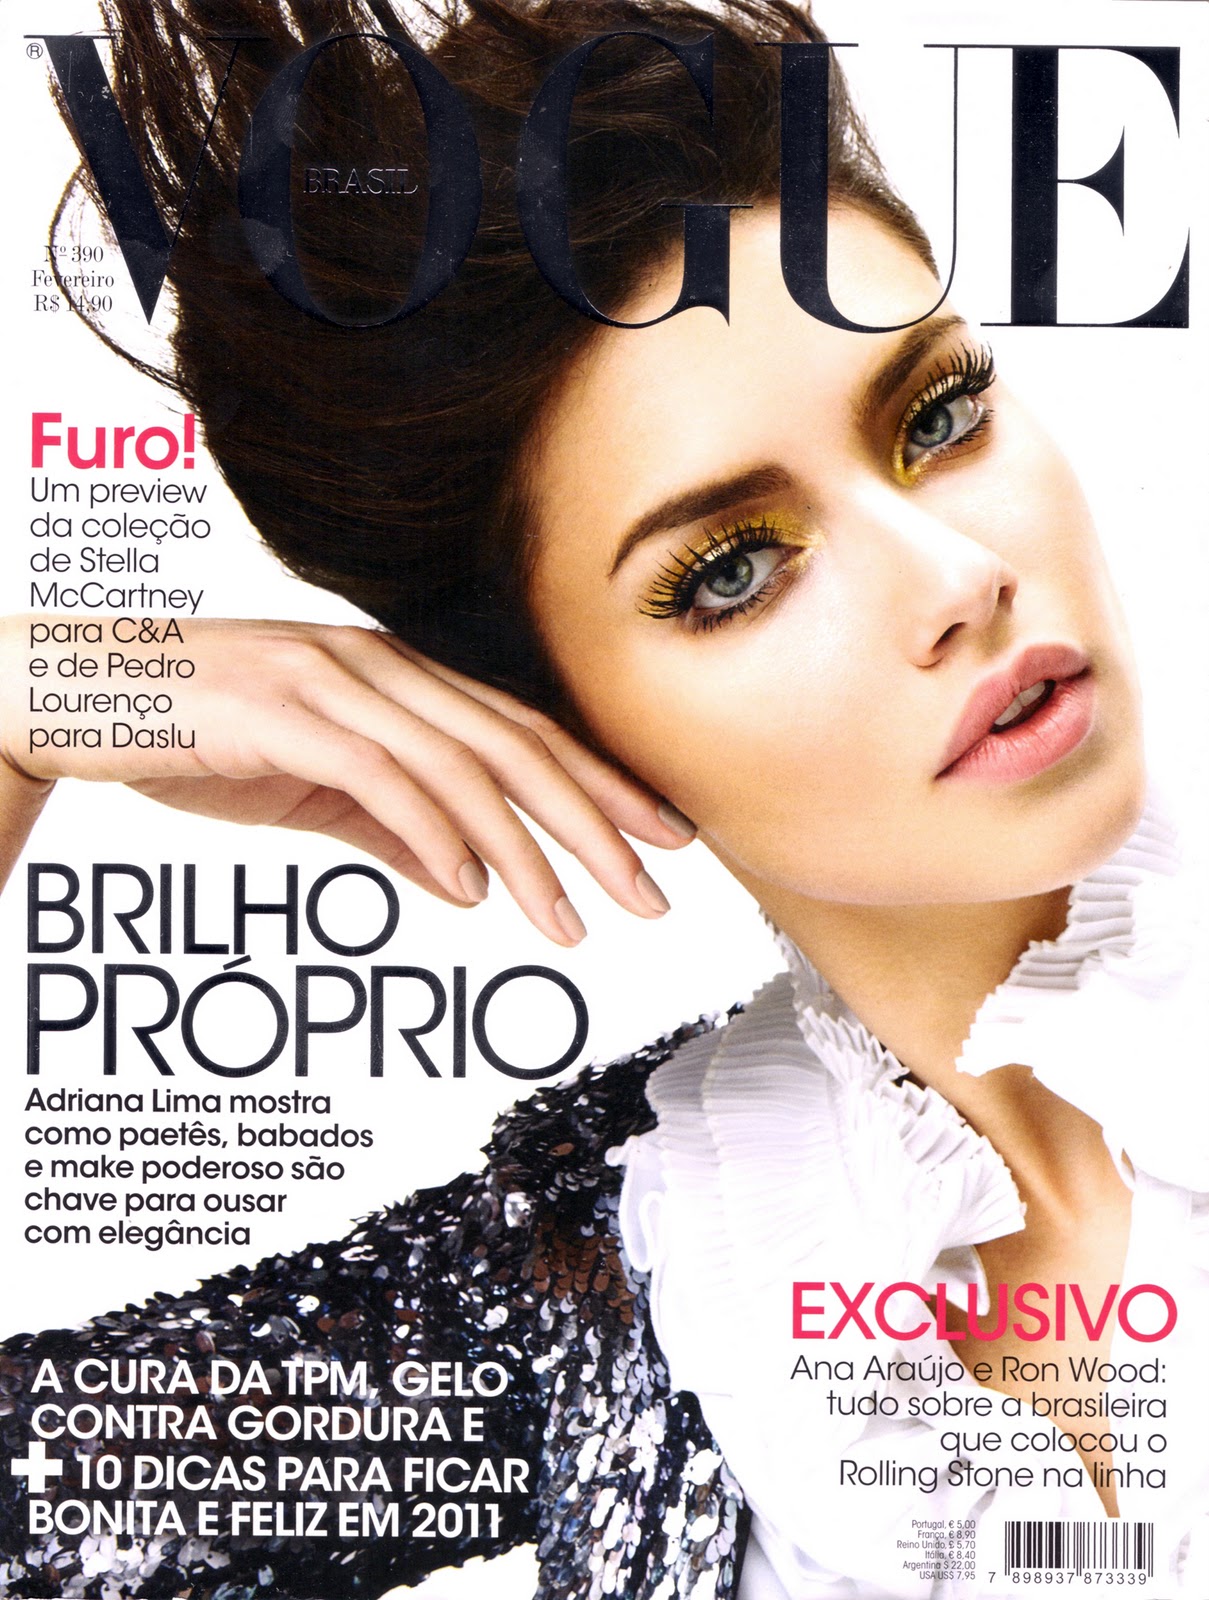 Adriana Lima (VOGUE Brazil Feb 2011) HQ cover - Models Inspiration